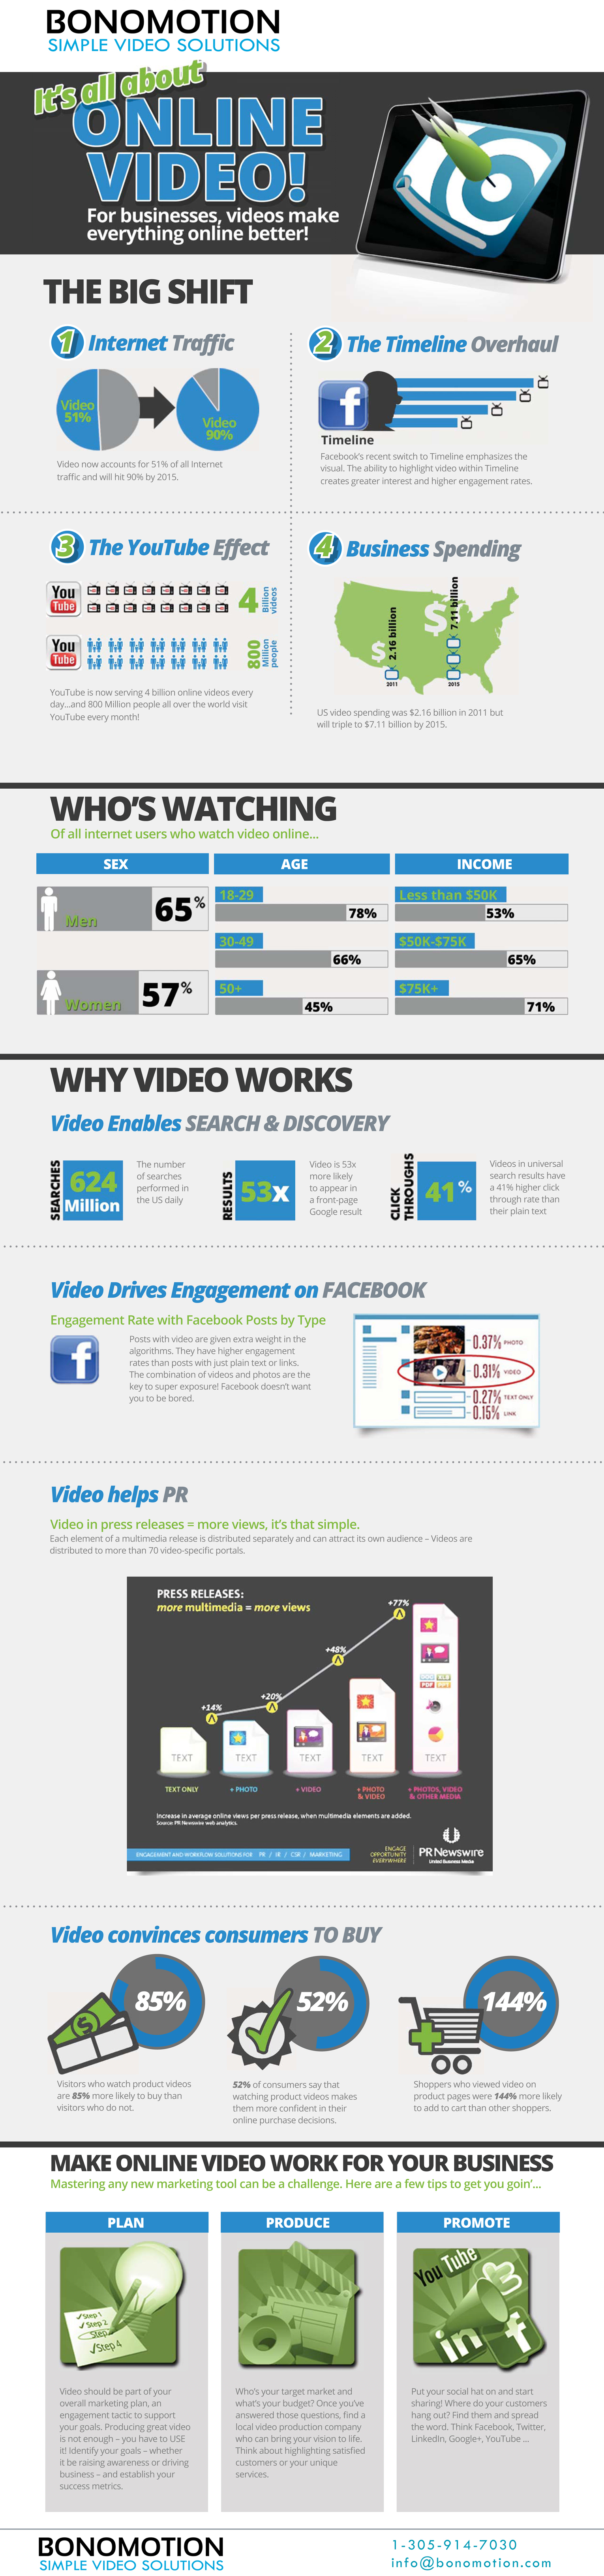 Video-Marketing-Infographic.jpg